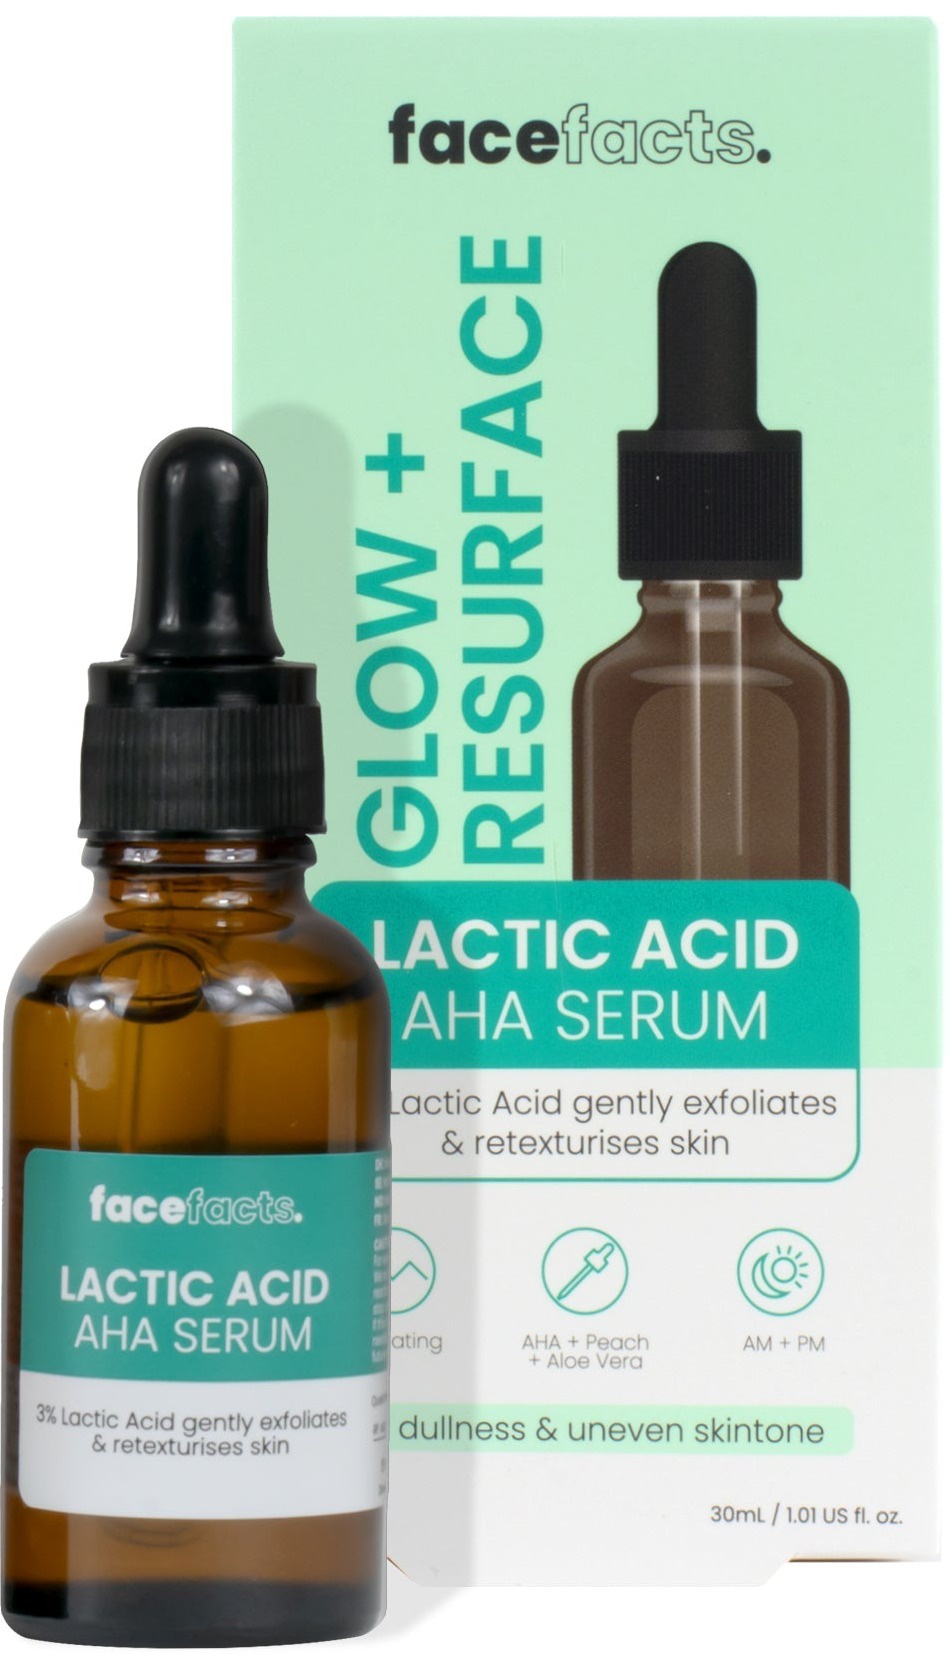 Face facts Lactic Acid AHA Serum